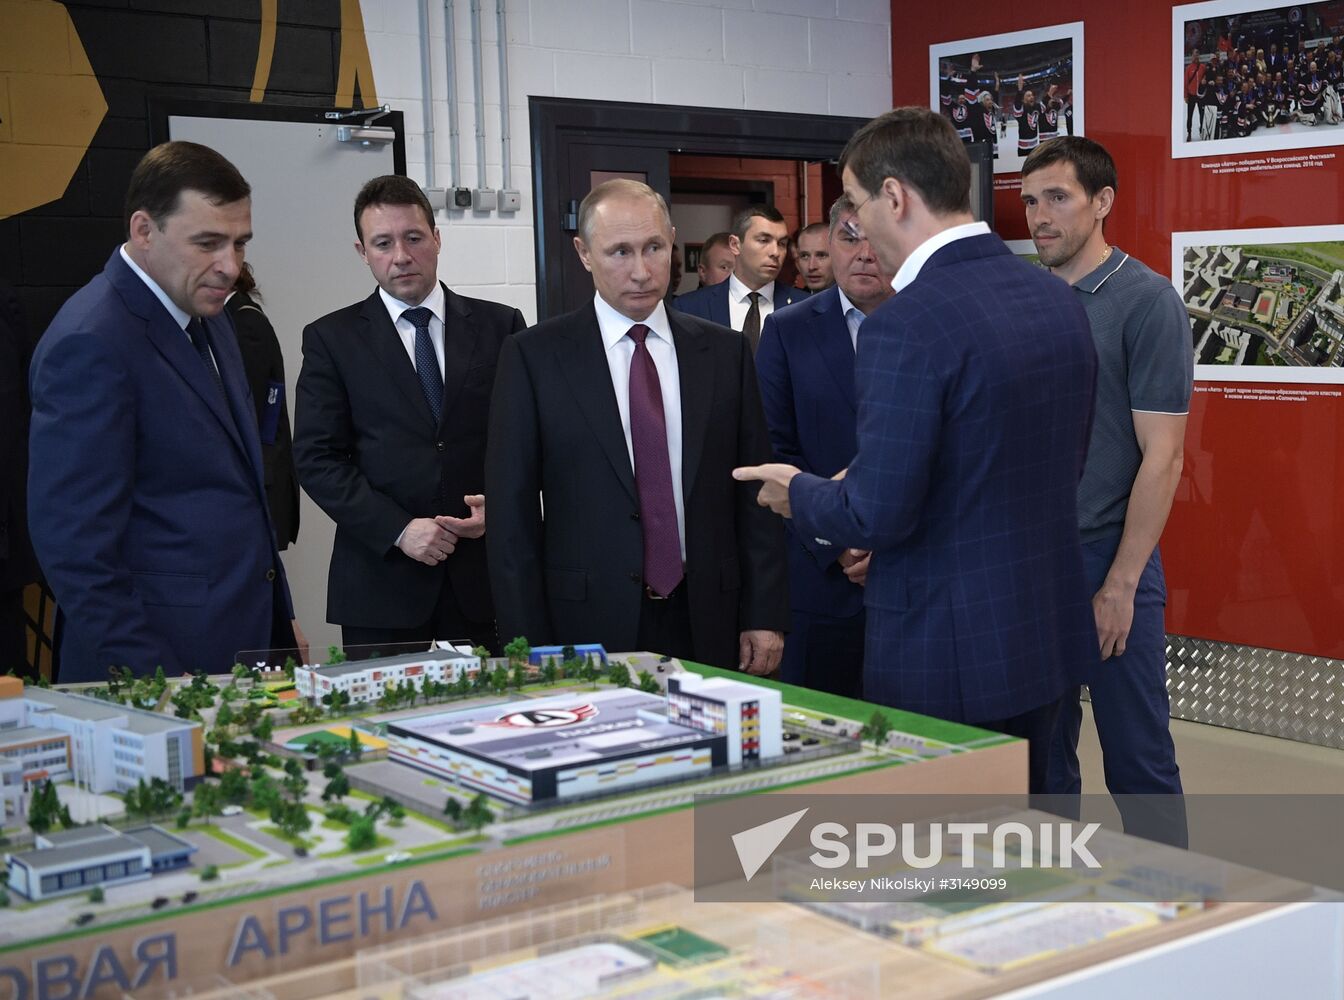 Russian President Vladimir Putin visits Yekaterinburg